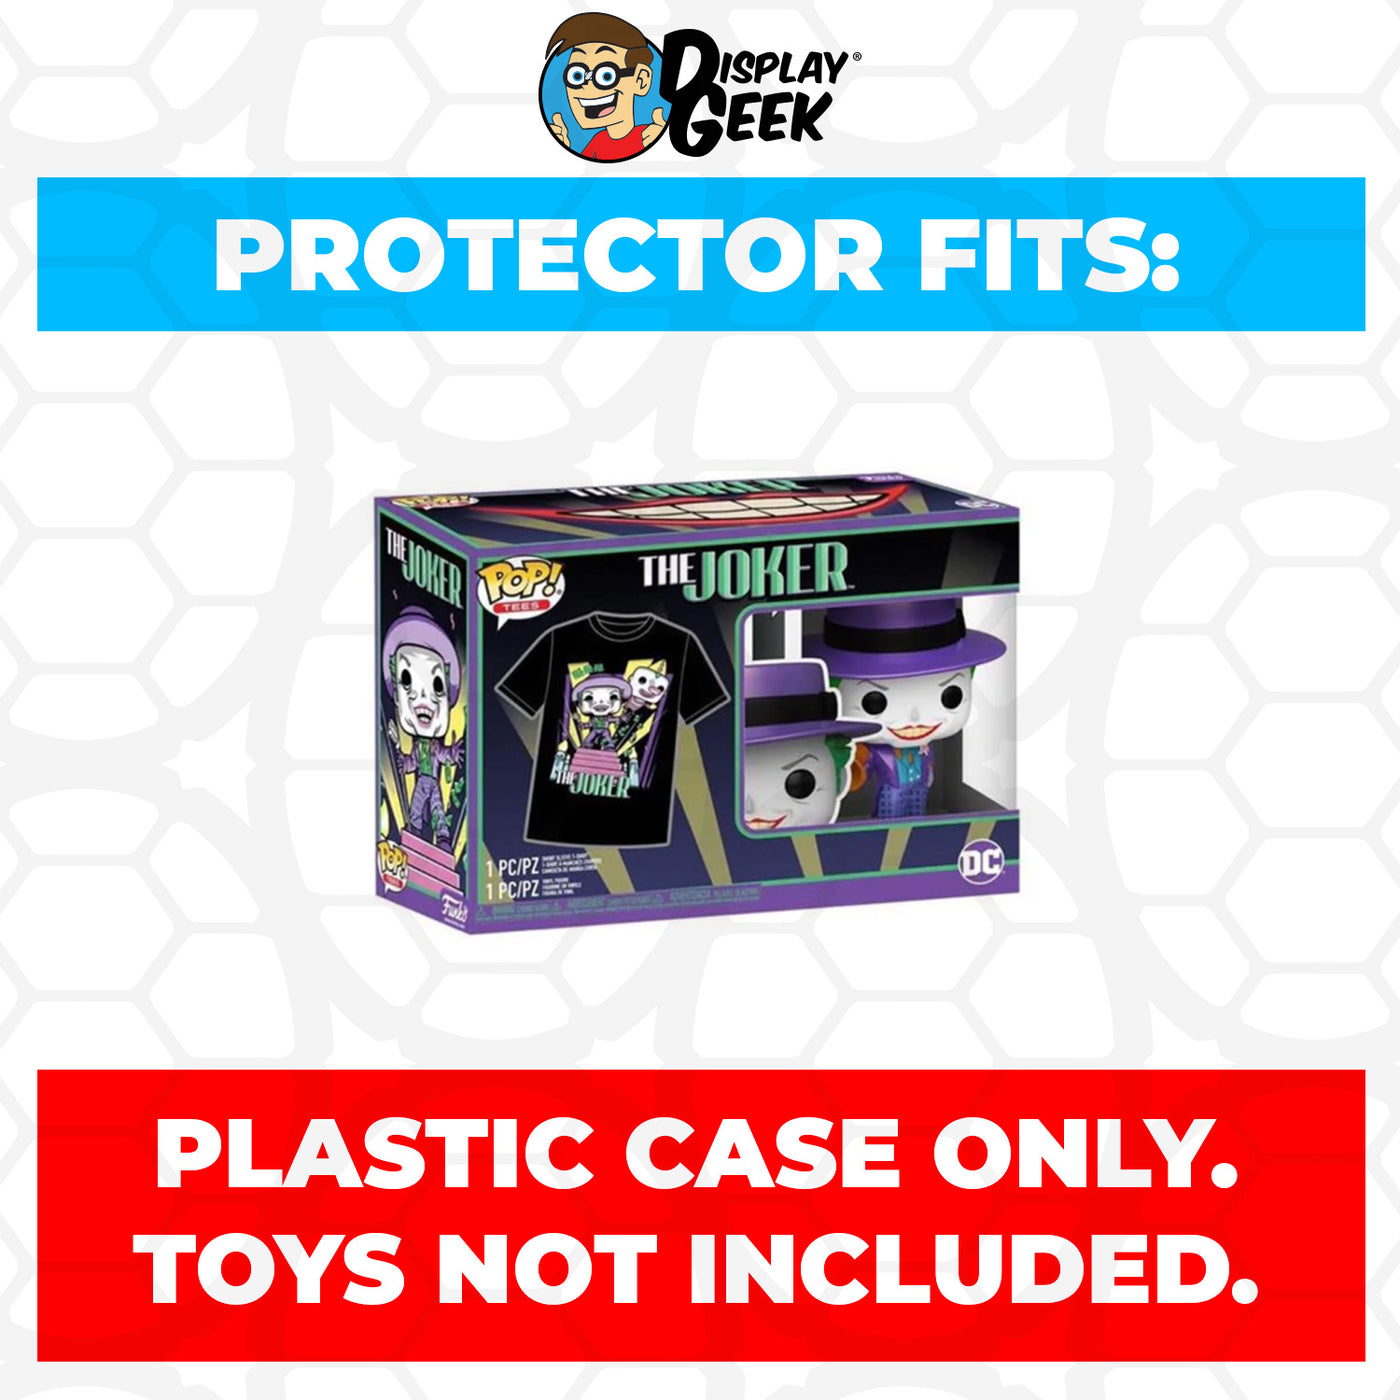 Pop Protector for Pop & Tee Joker with Megaphone 1989 Metallic #403 Funko Box on The Protector Guide App by Display Geek